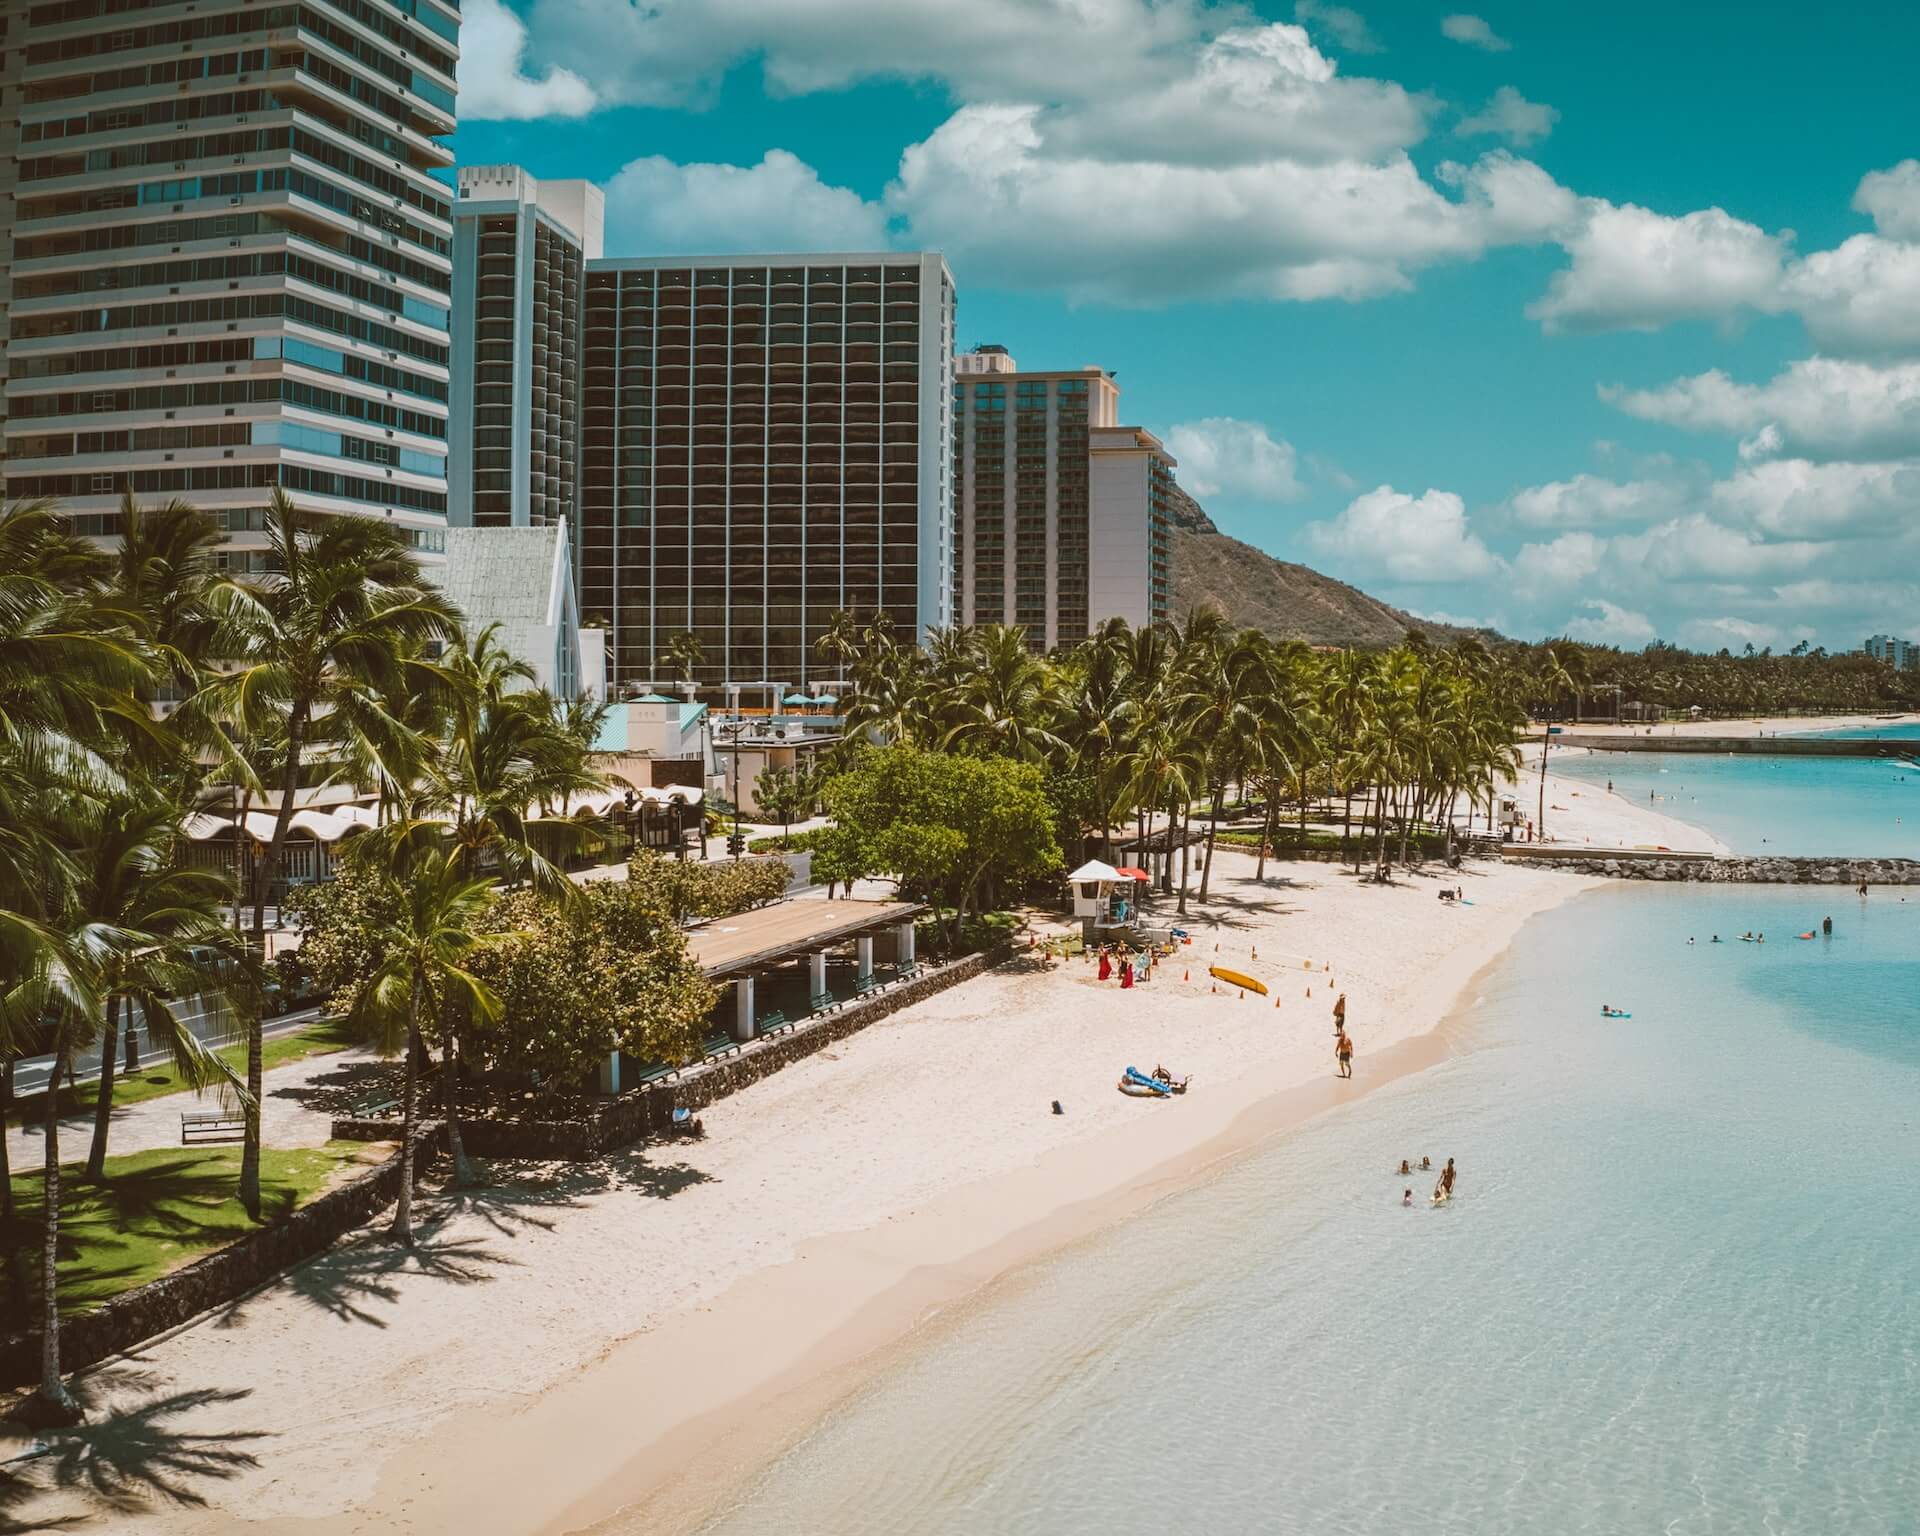 Golden Beach in Honolulu, HI with hotels in background.